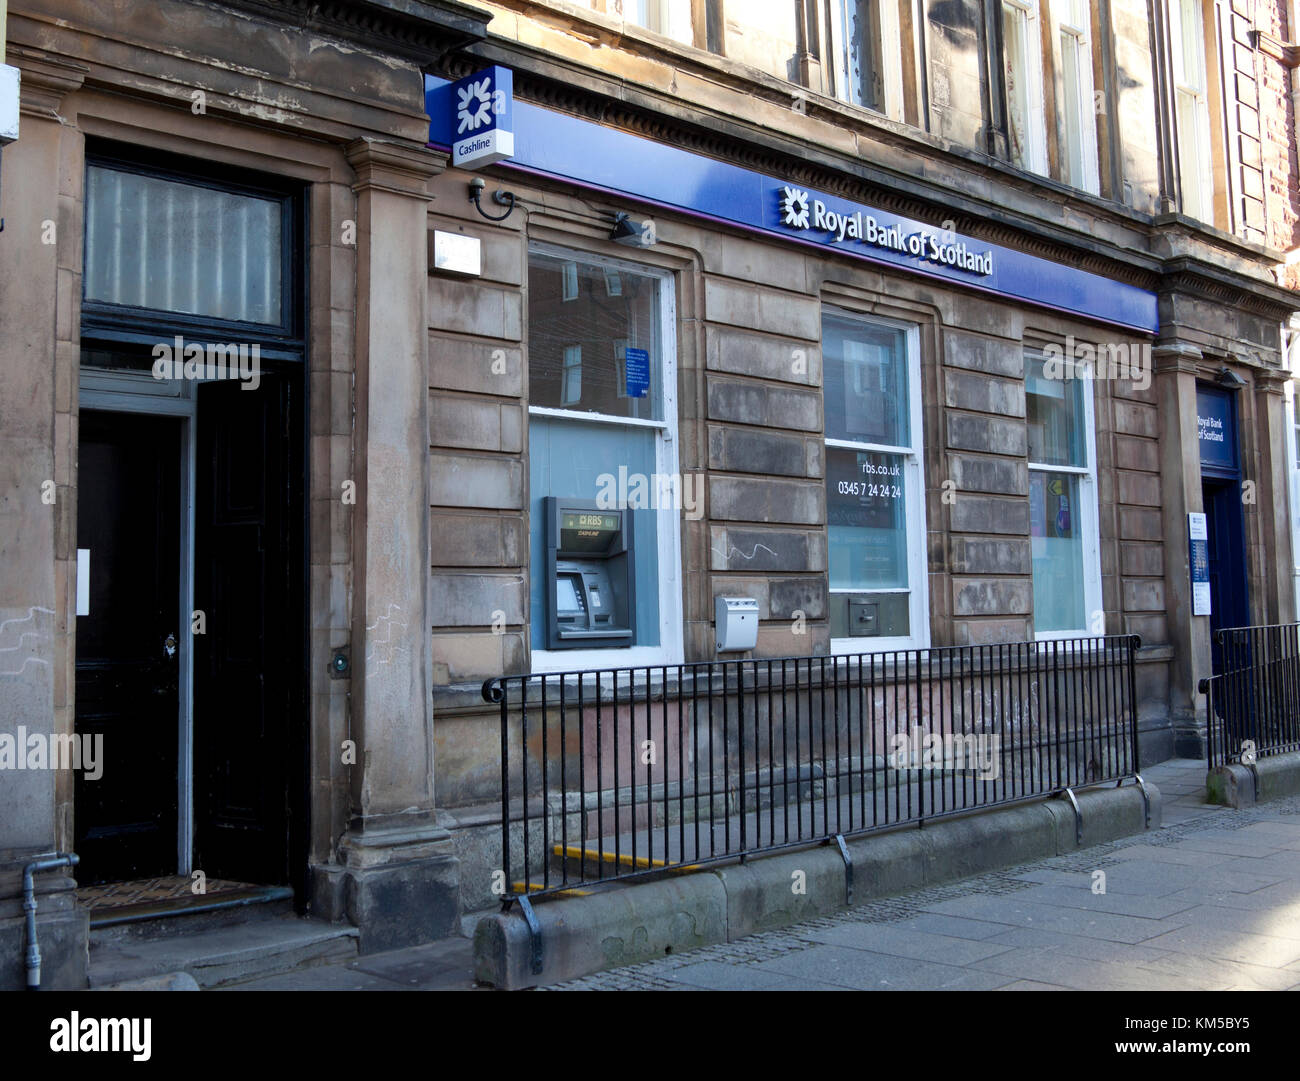 Royal Bank of Scotland, Dunbar, East Lothian, Scotland, UK Banque D'Images